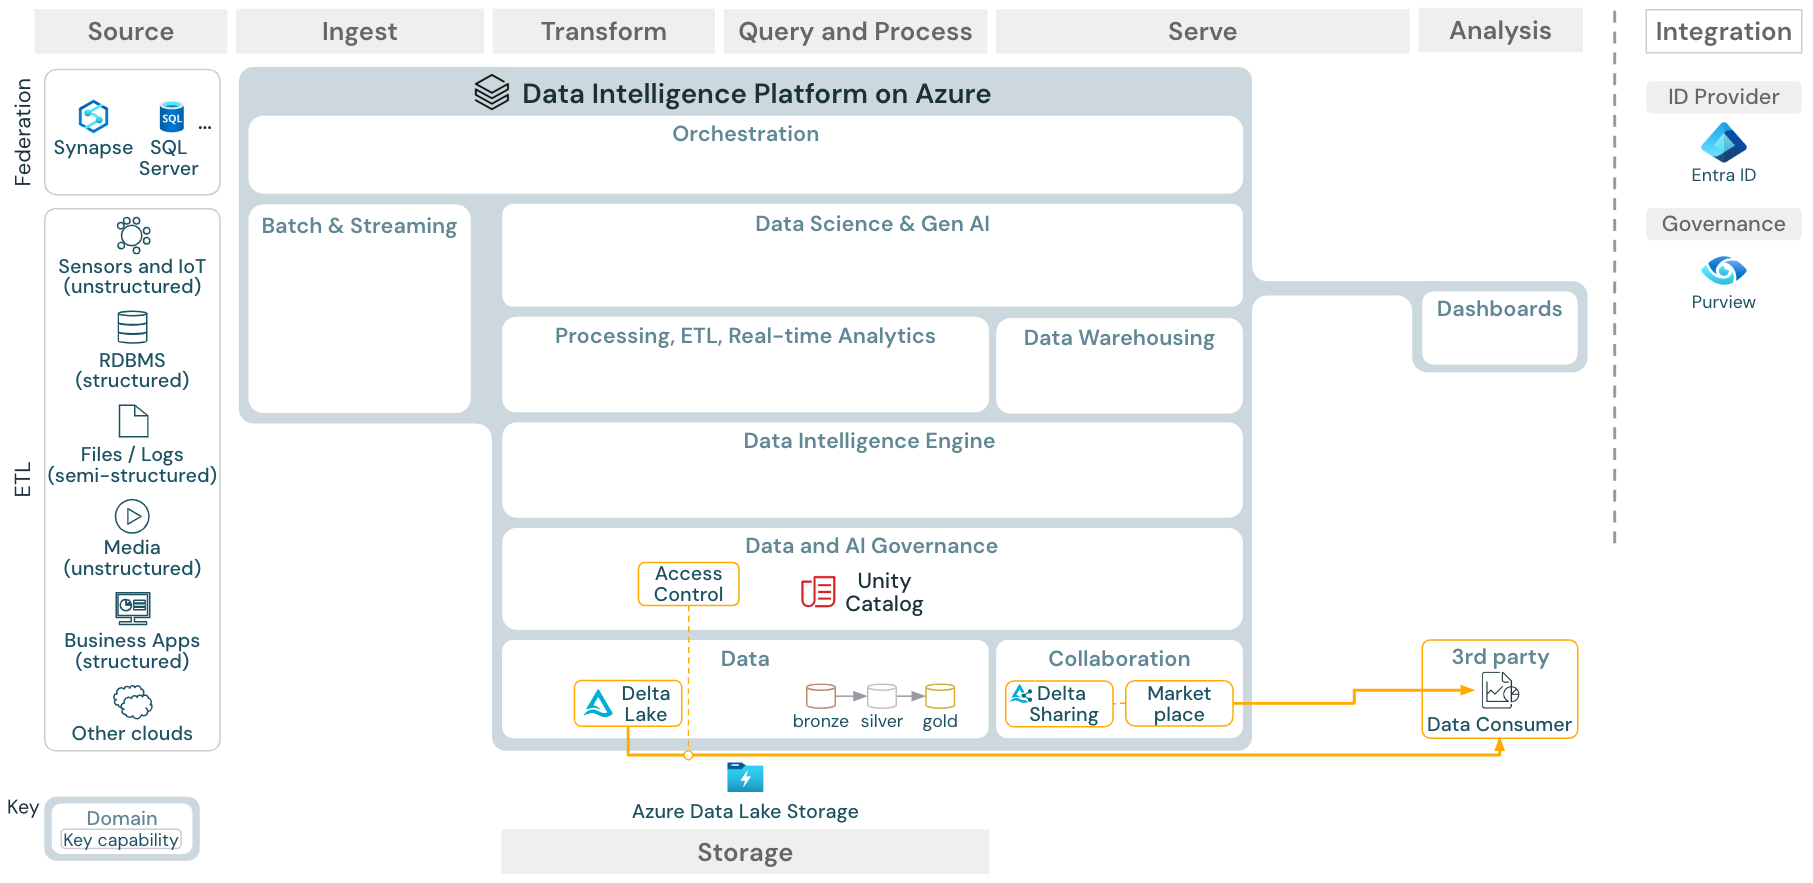 Enterprise data sharing reference architecture for Azure Databricks